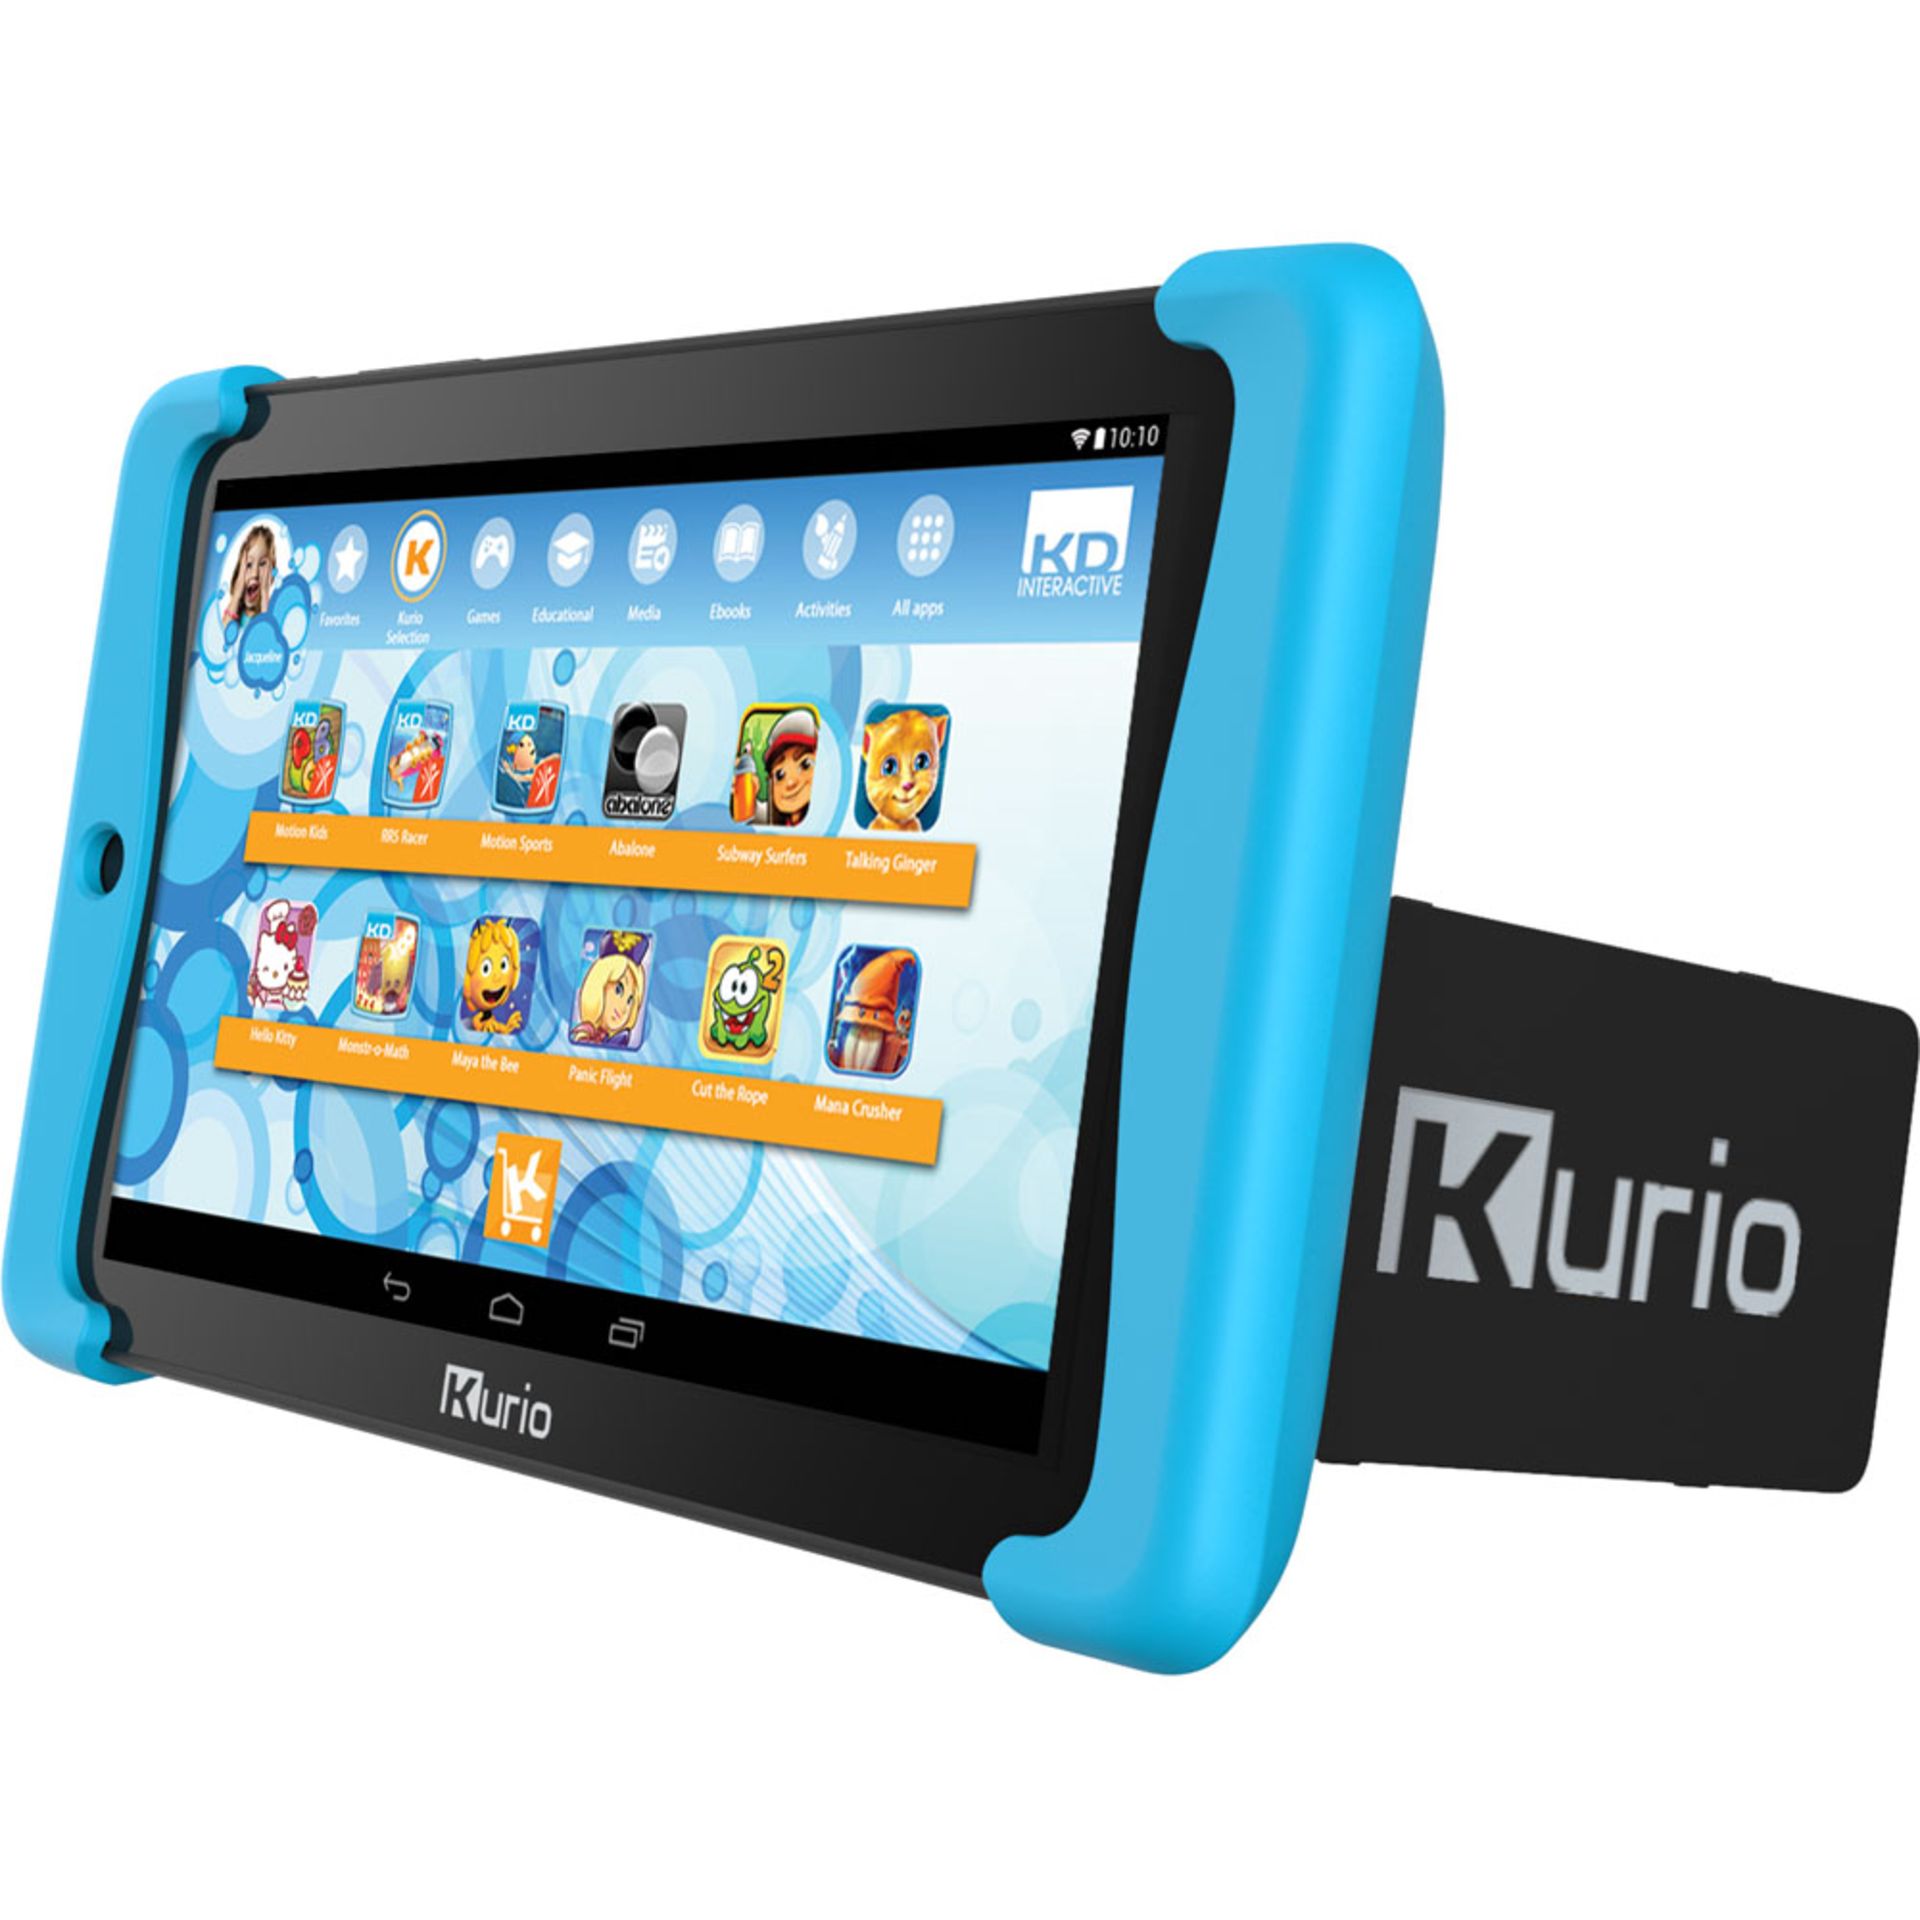 V Grade B Kurio Tab 2 7" Android Tablet - 8GB Storage - Android 5.0 - Quad Core Processor - Pre